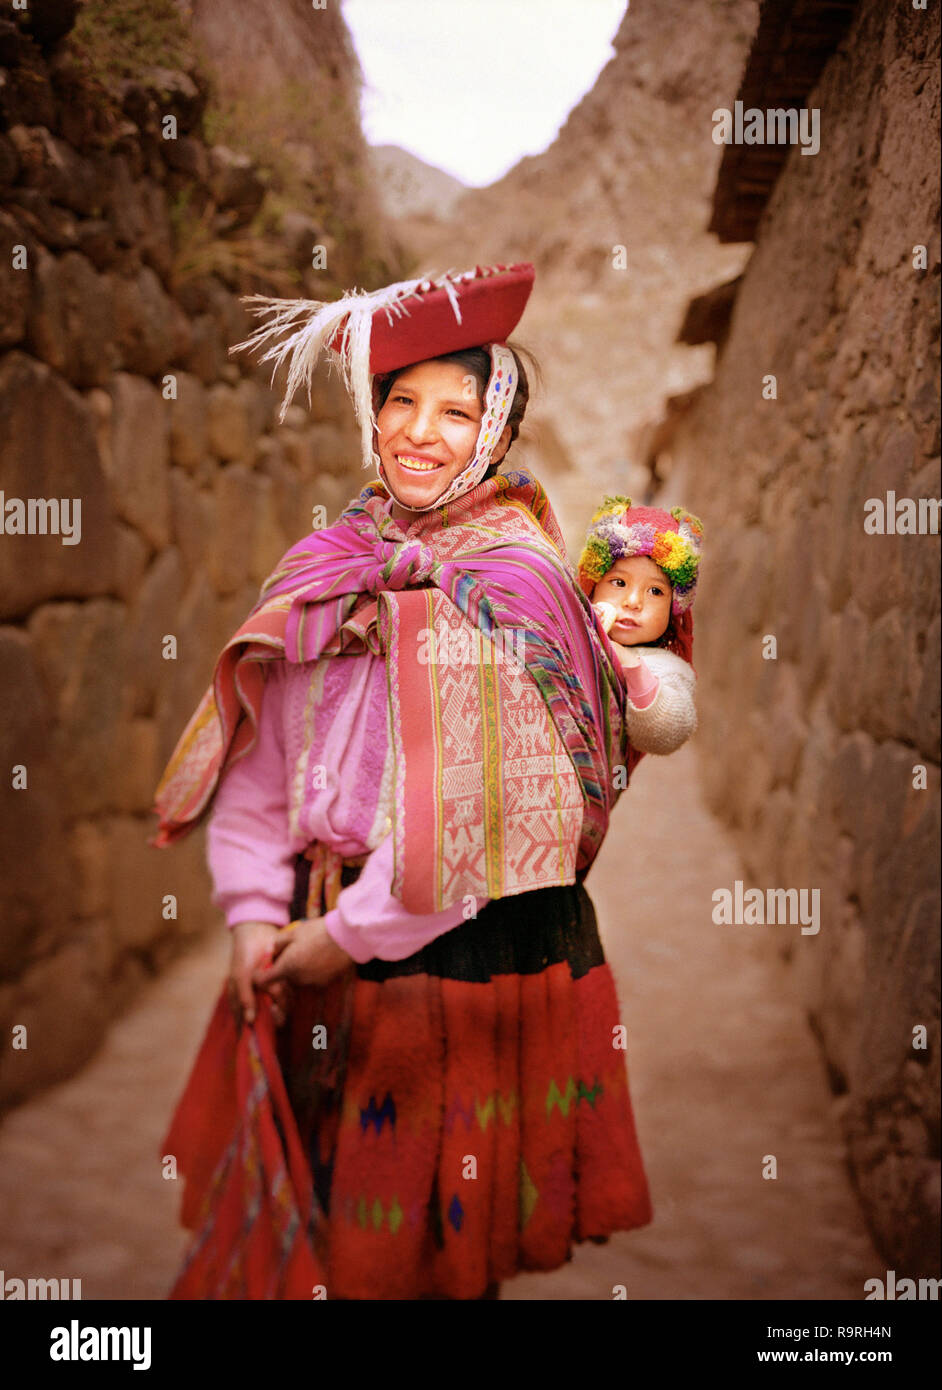 Peruvian woman in alleyway Stock Photo